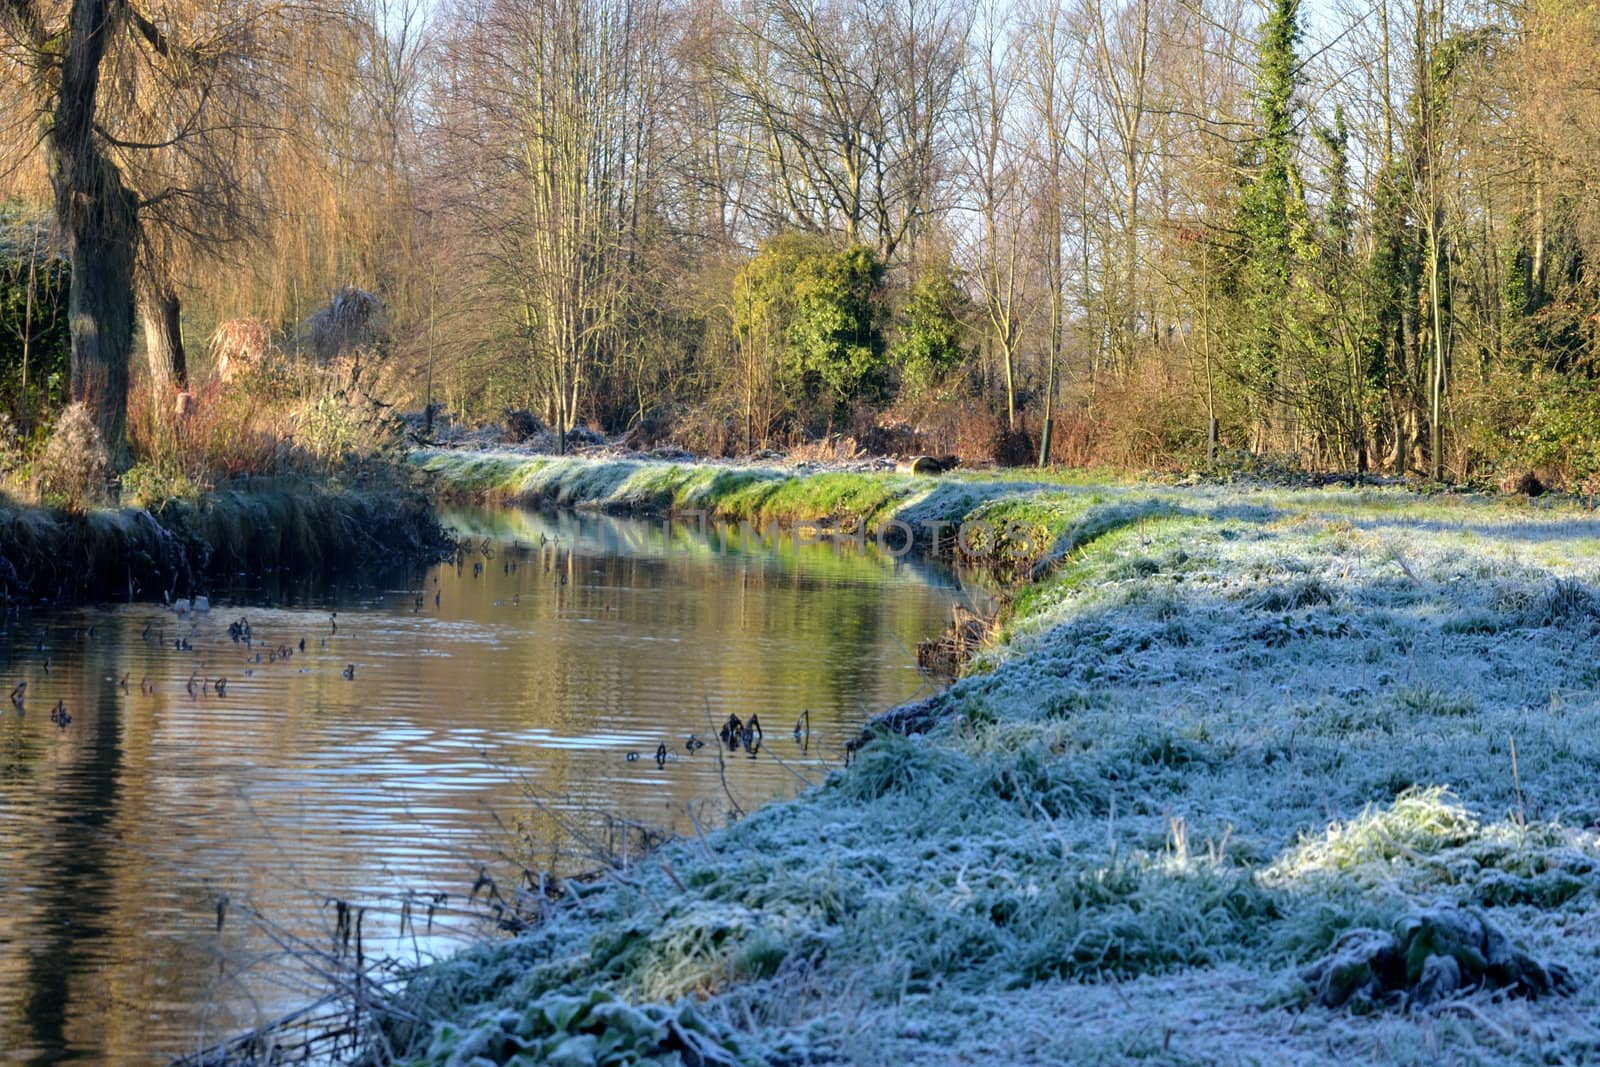 frosty english river scene